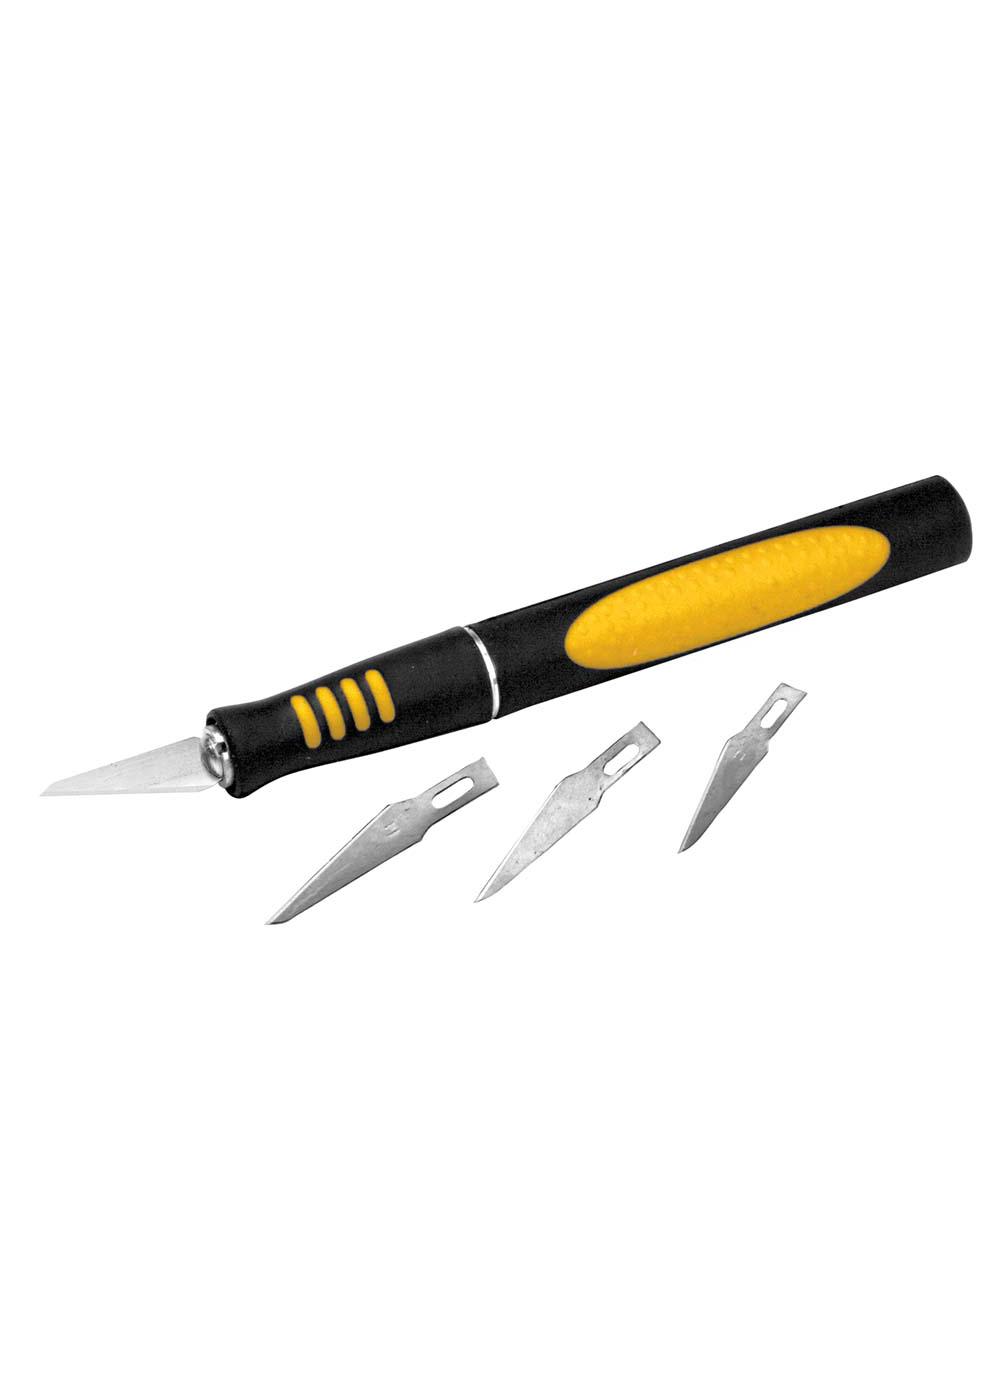 Performance Tool Hobby Knife Set; image 2 of 2